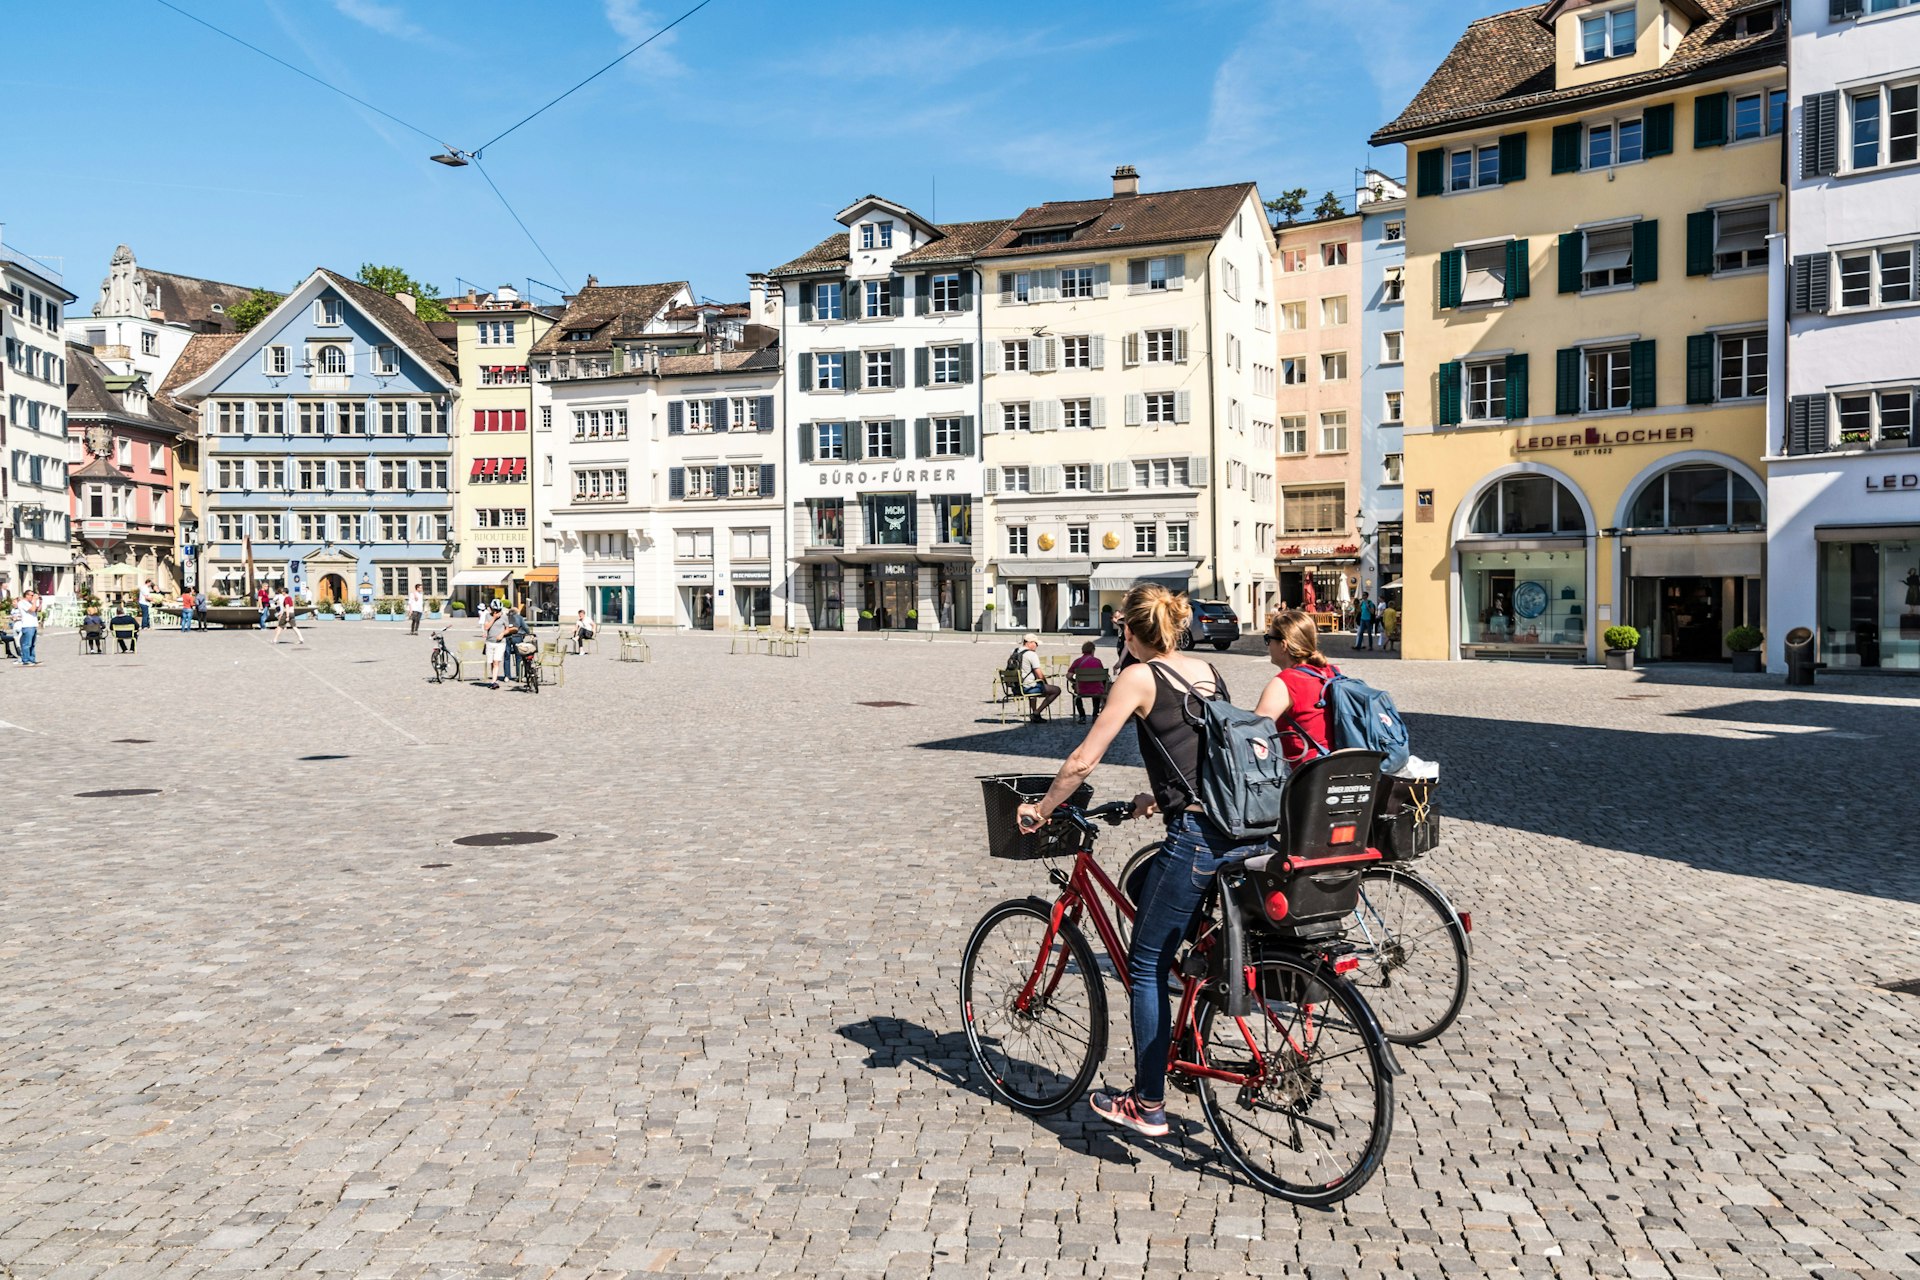 Two cyclists ride bikes through a quaint medieval square